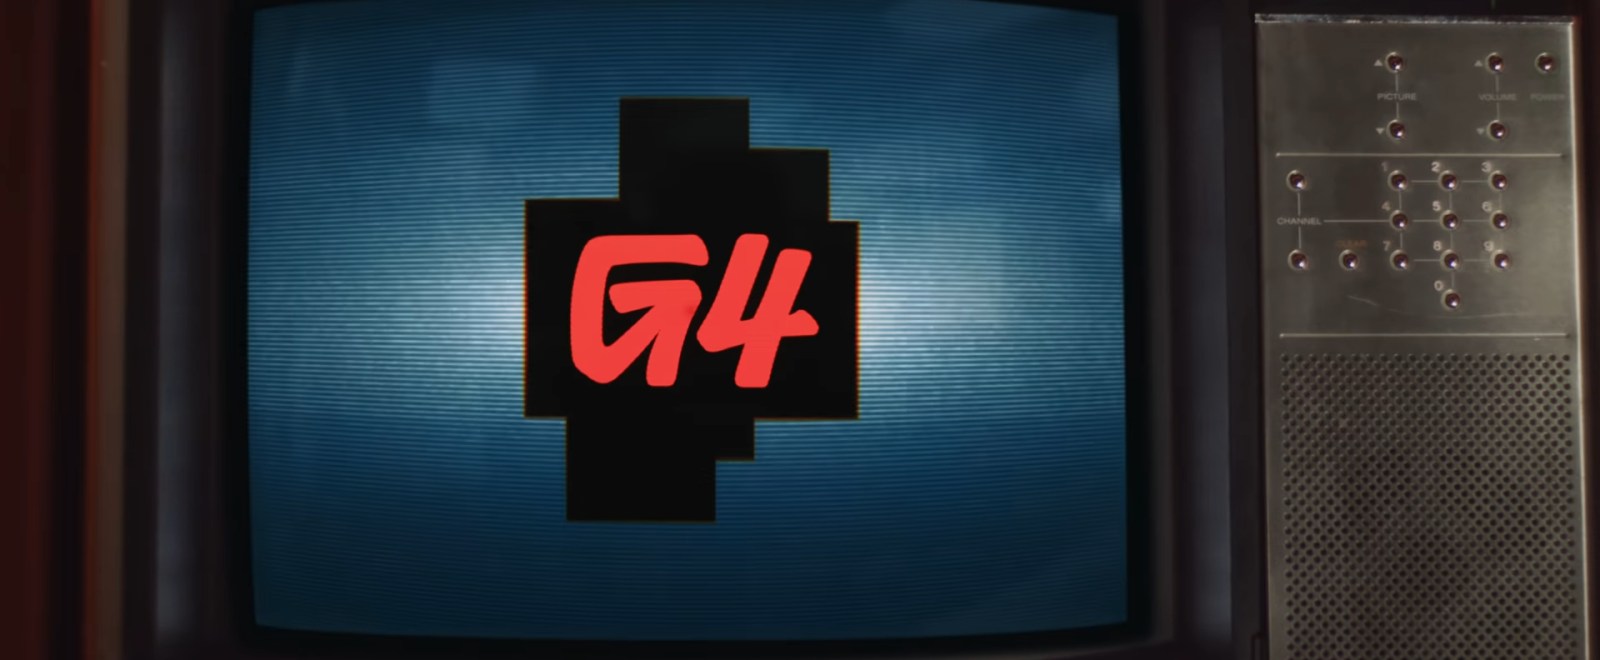 g4-launch